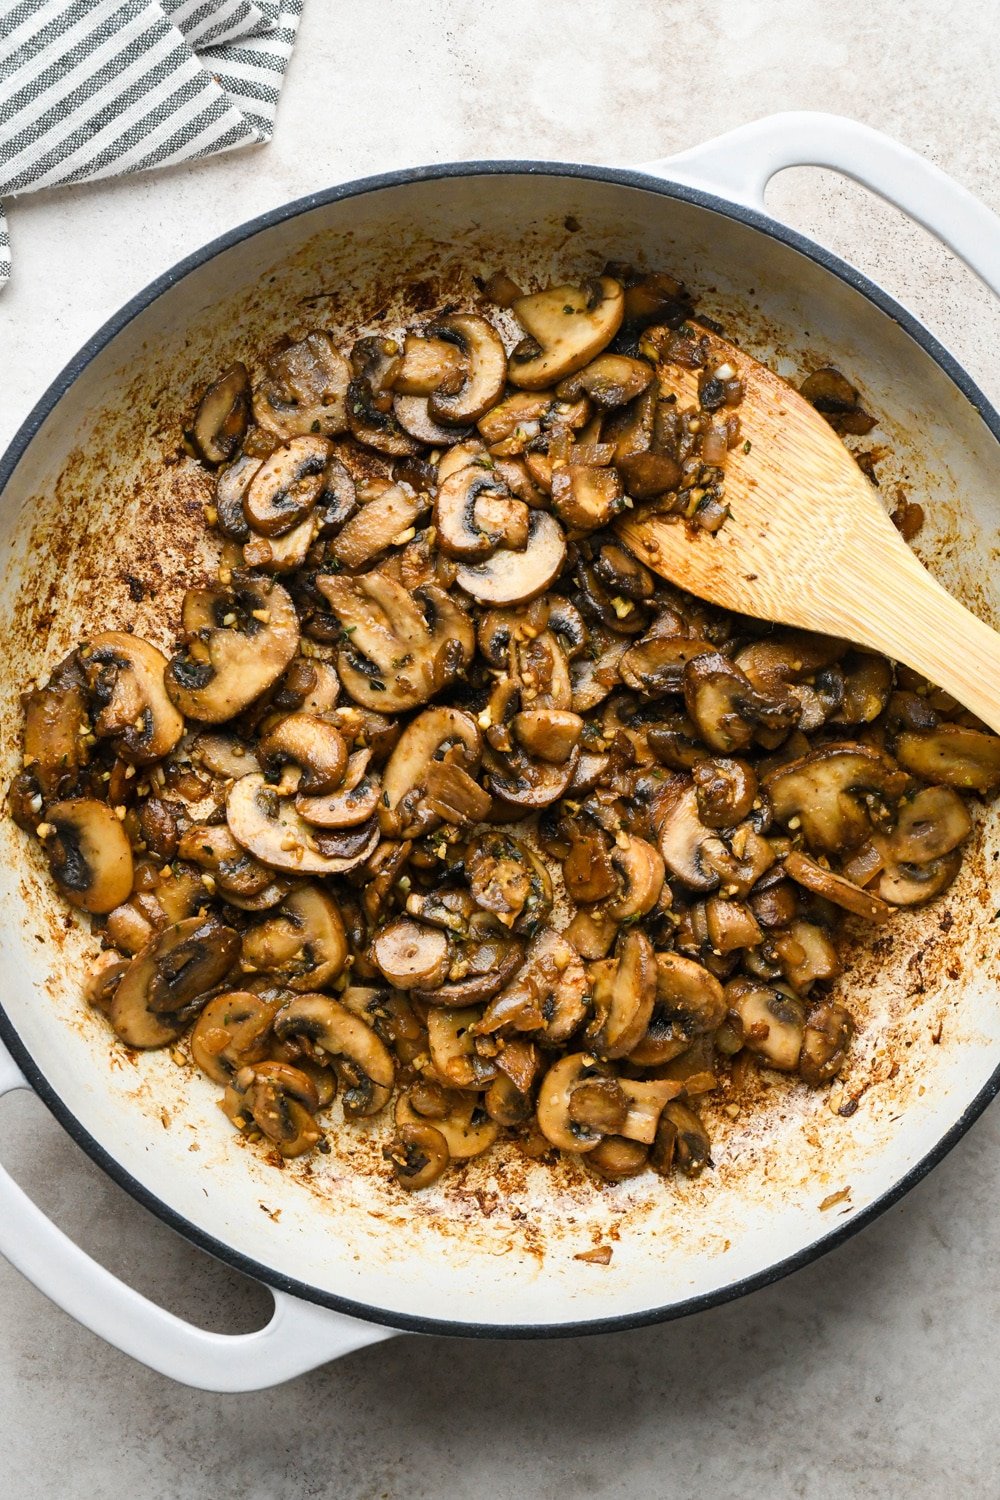 How to make Gluten Free Mushroom Gravy: Spices and aromatics being stirred into sautéed mushrooms.